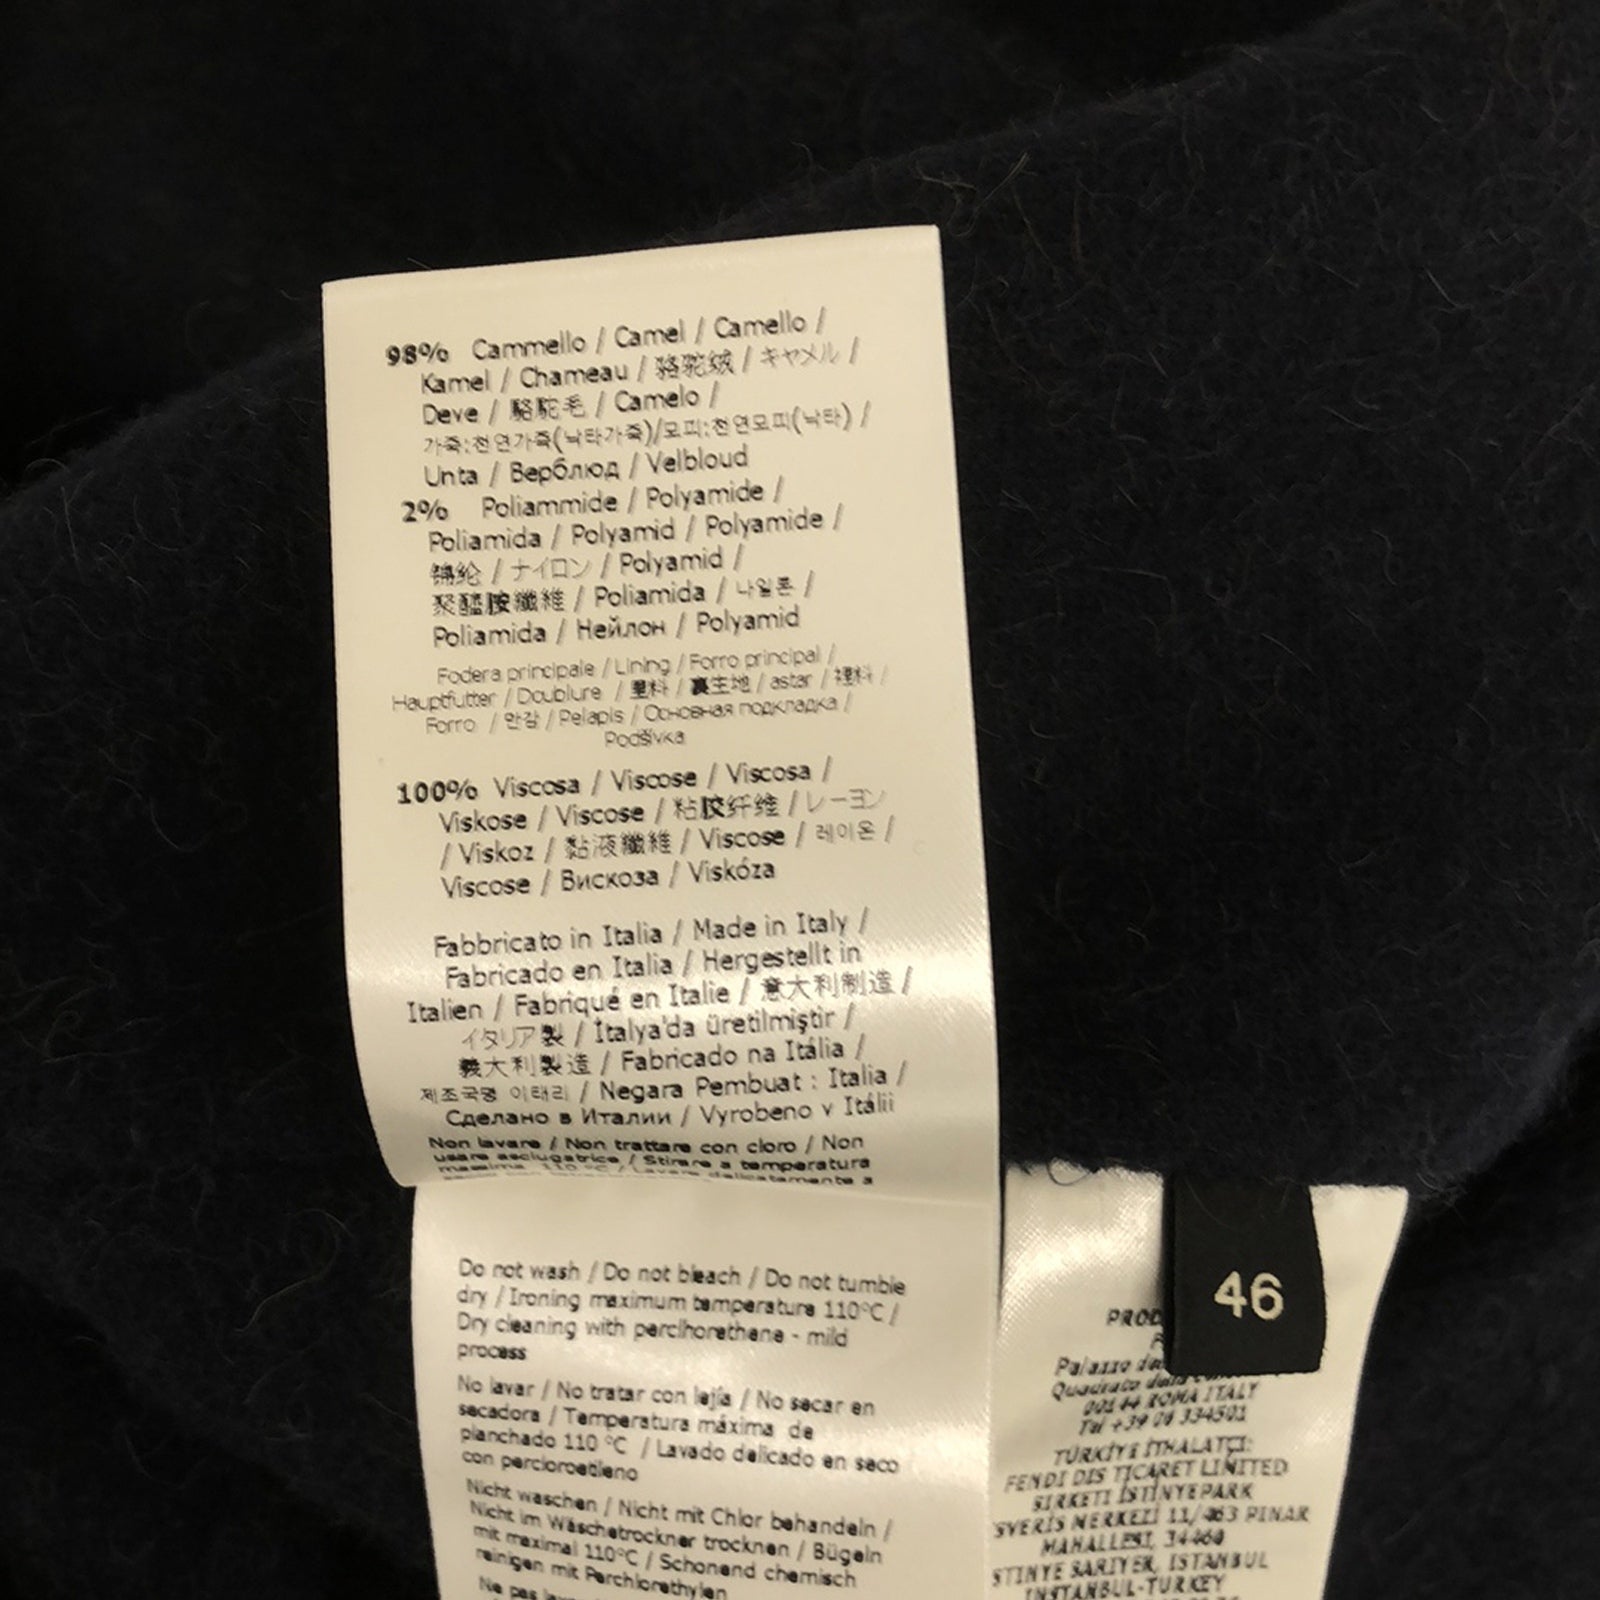 Fendi Fendi Outdoor Wool  Coat FF0736APNOF1AJR46